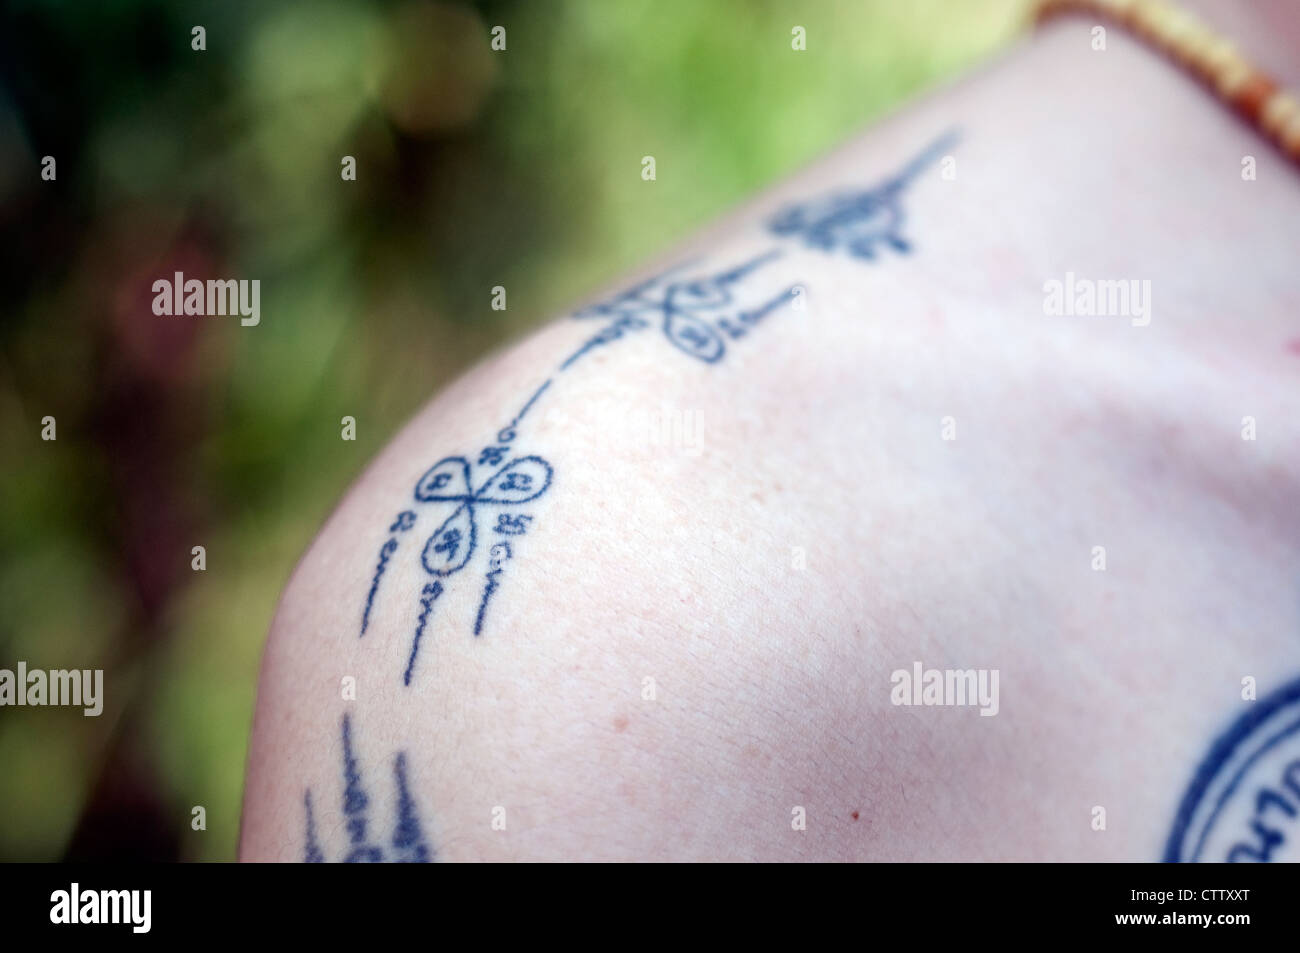 Sak Yan master,Ajahn Gop of Ayuthaya, Thailand. Sak Yan are the mystical tattoos popular in Thailand. Stock Photo